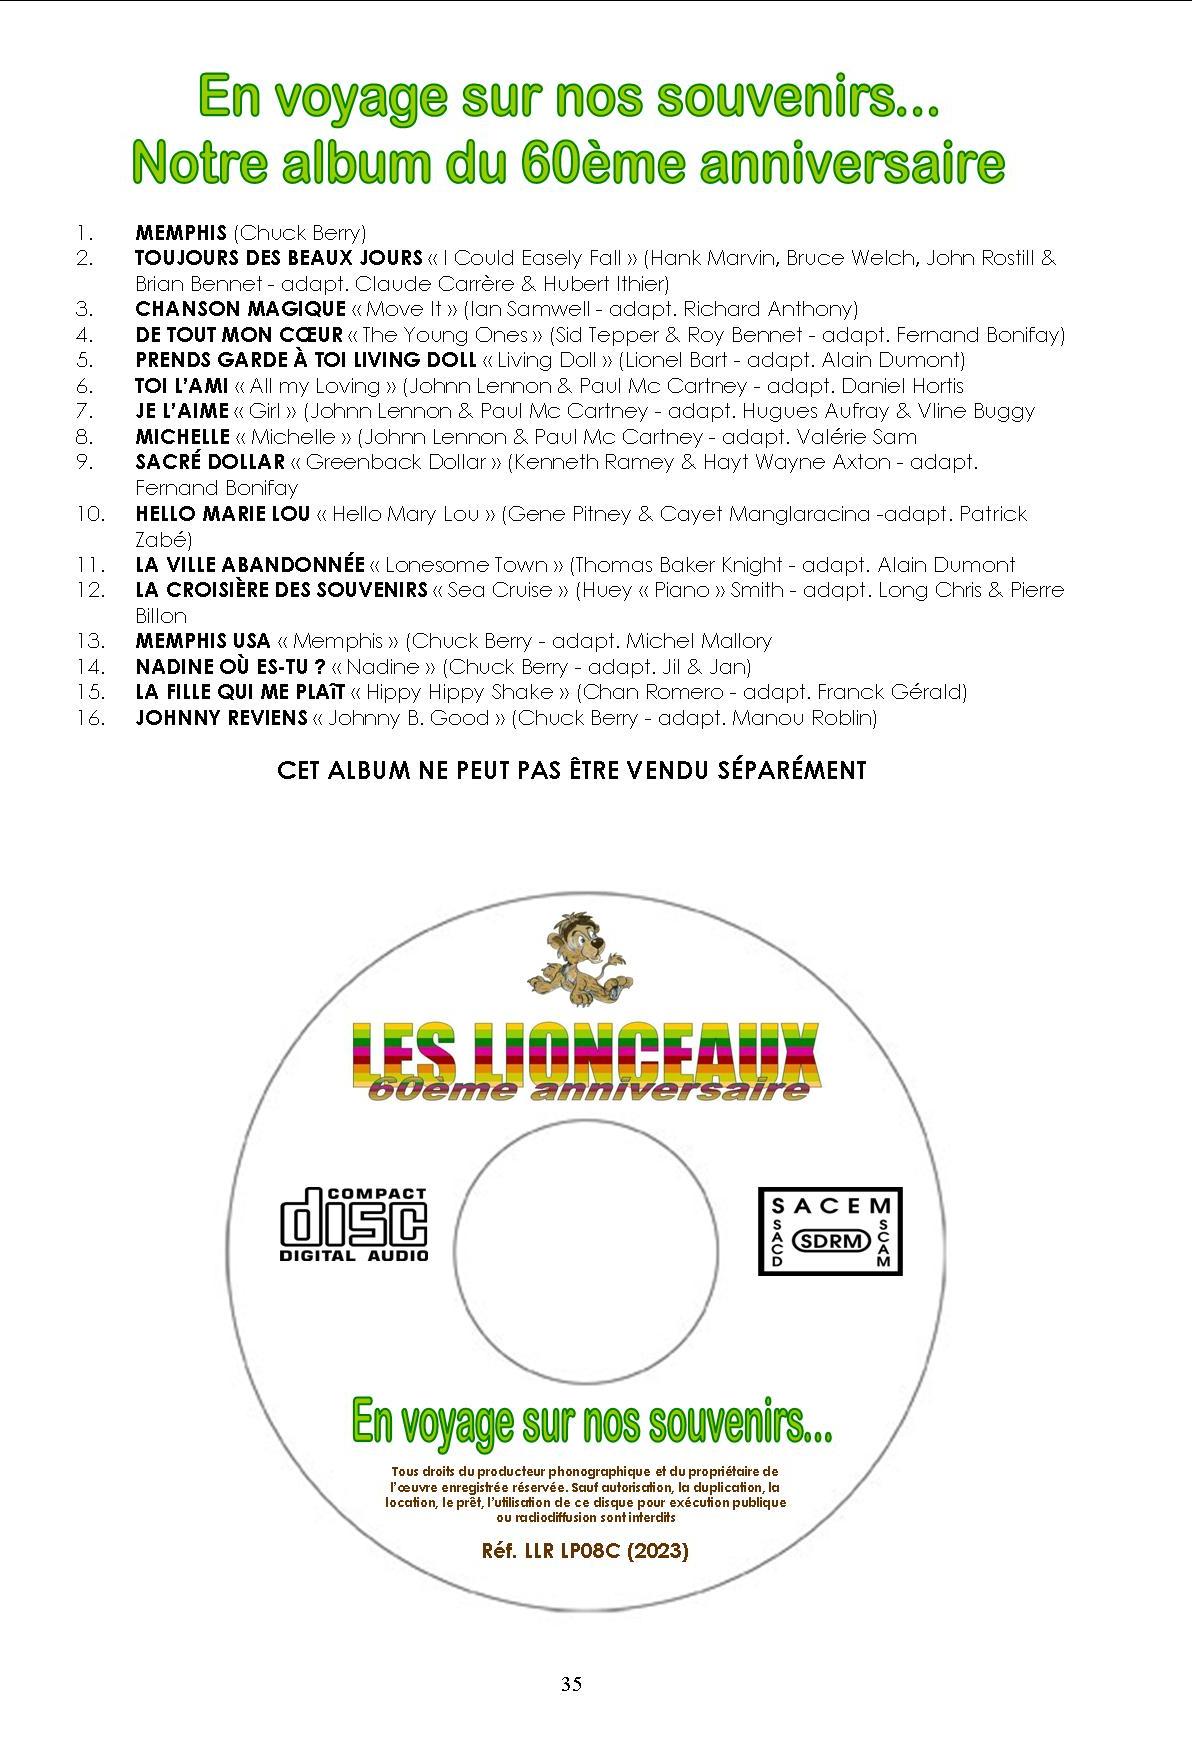 CD Jaquette 1-4.JPG